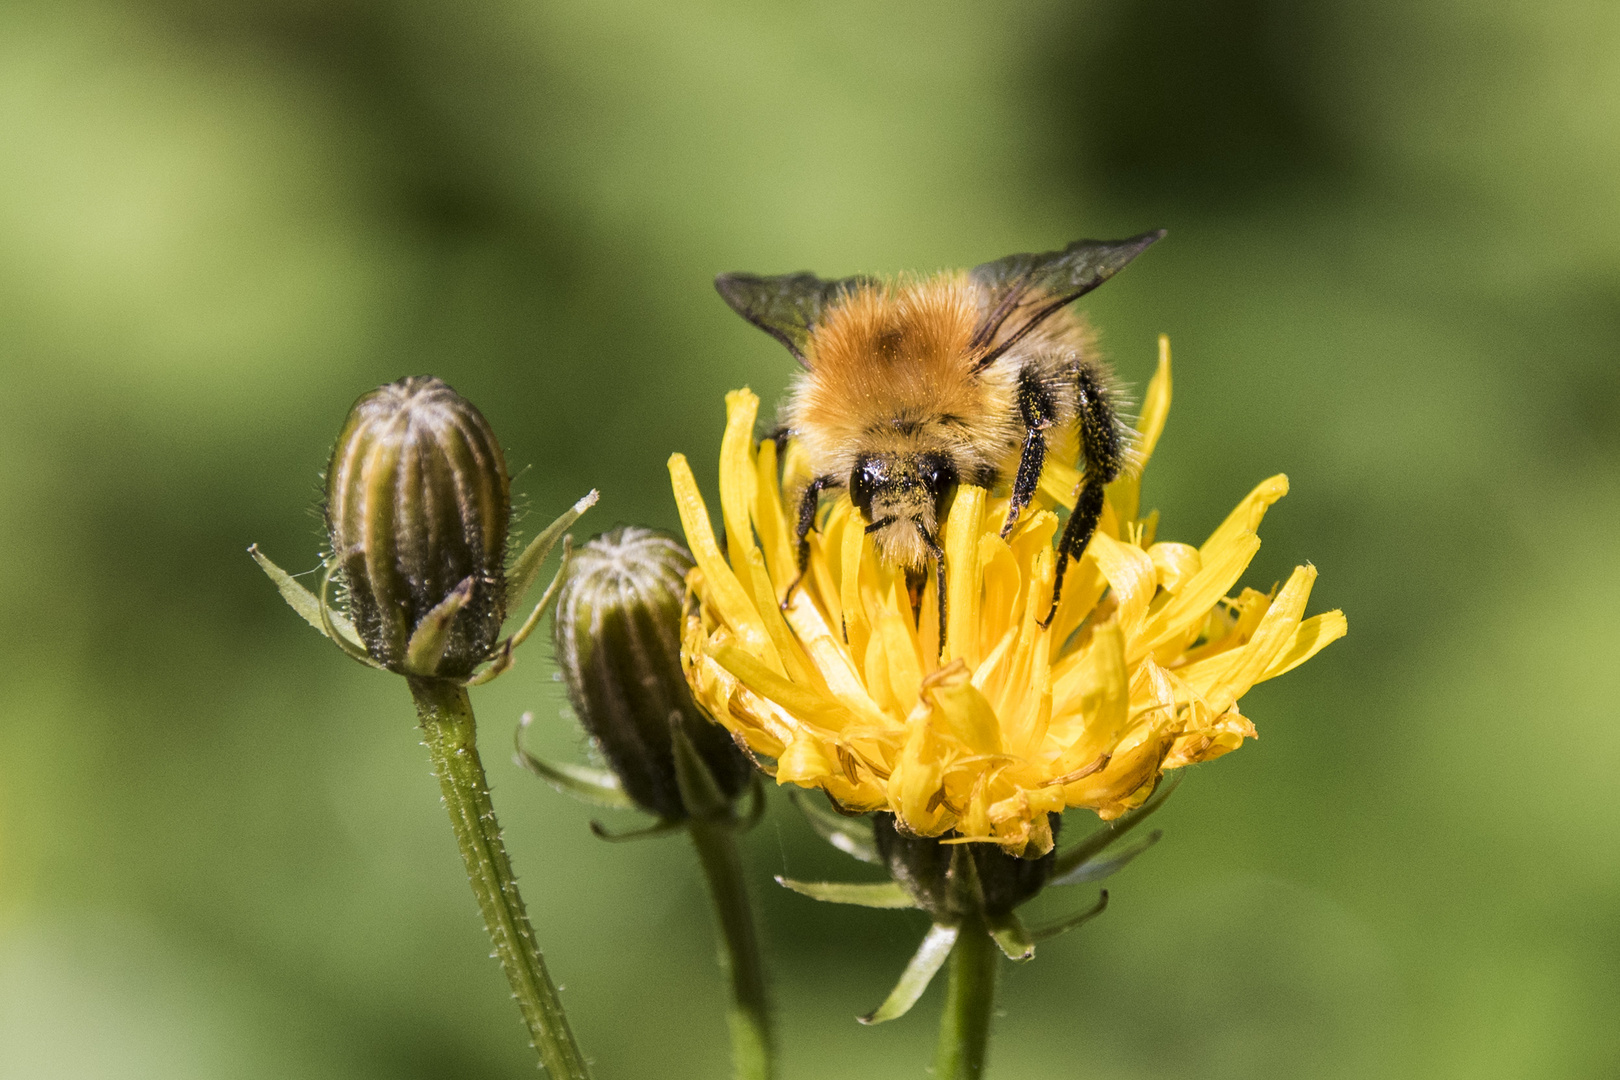 Biene in der Blüte